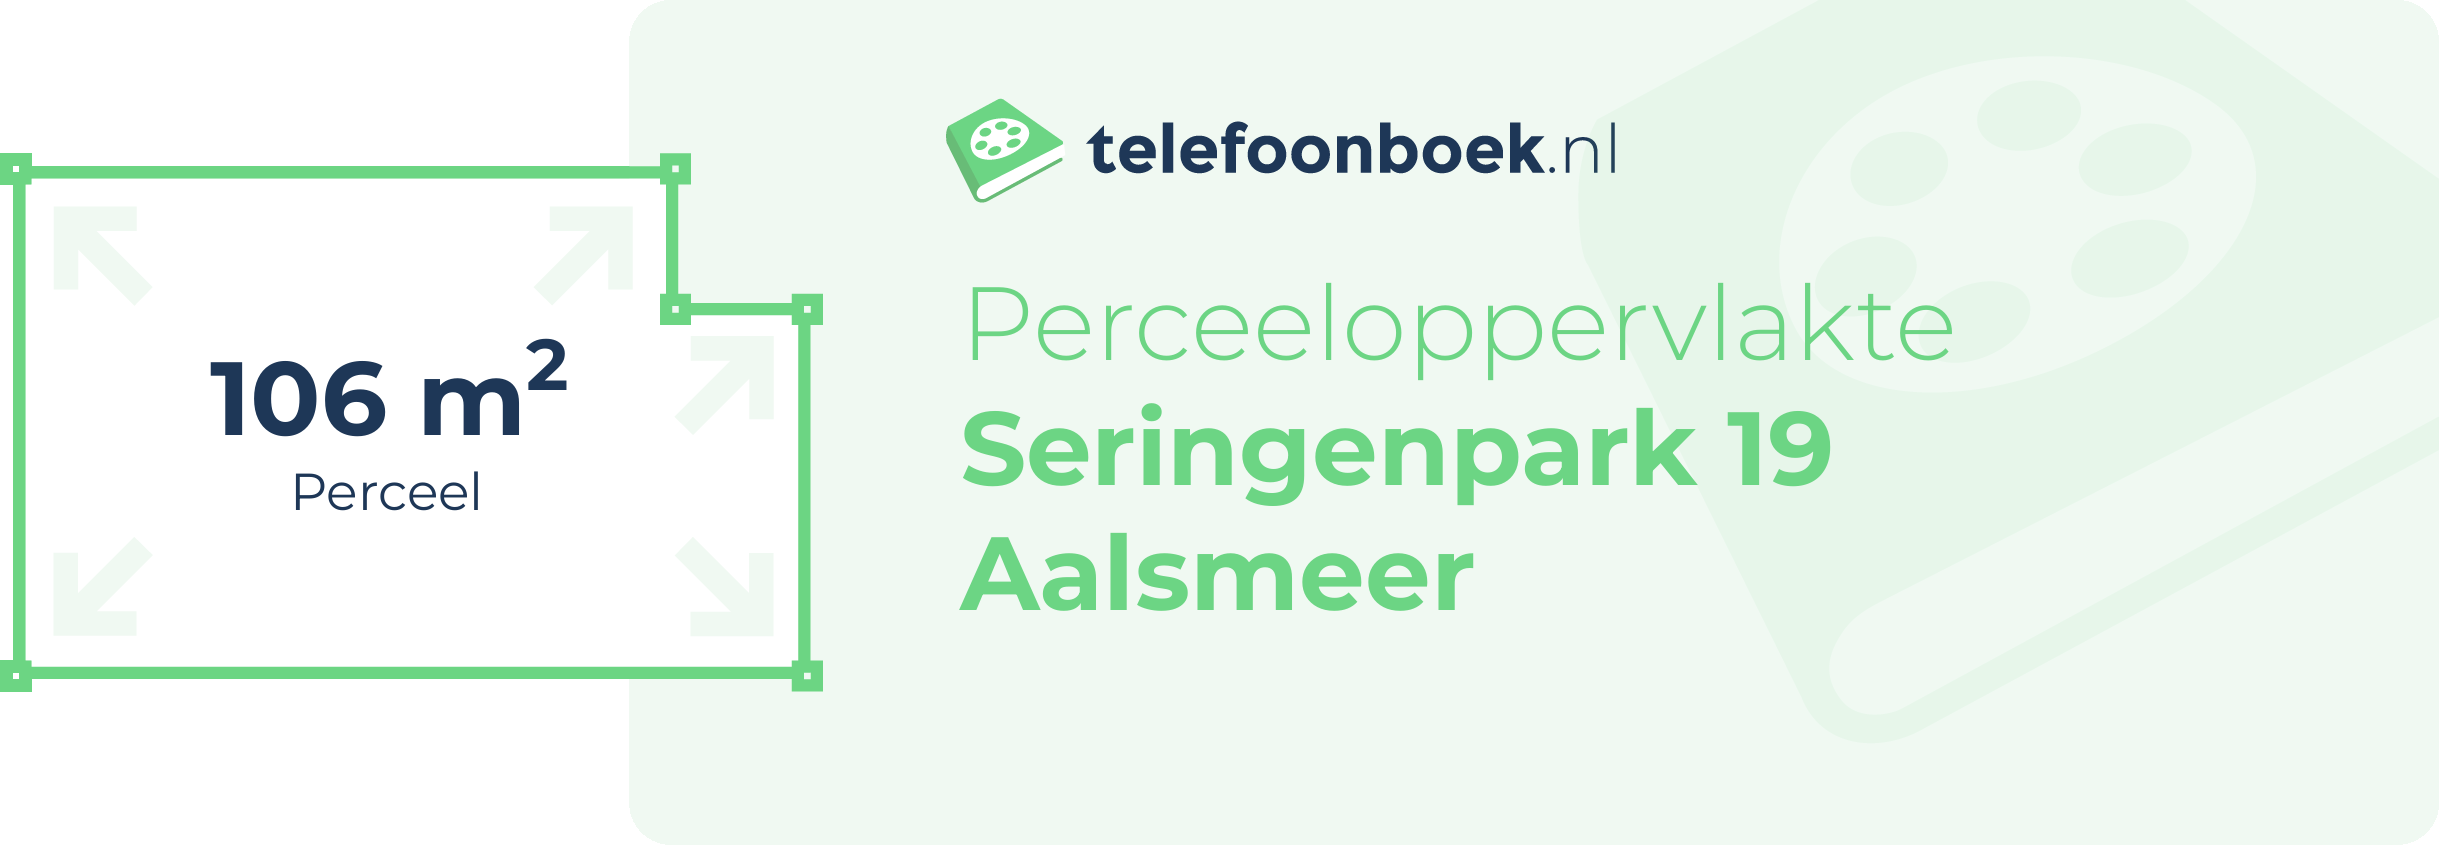 Perceeloppervlakte Seringenpark 19 Aalsmeer